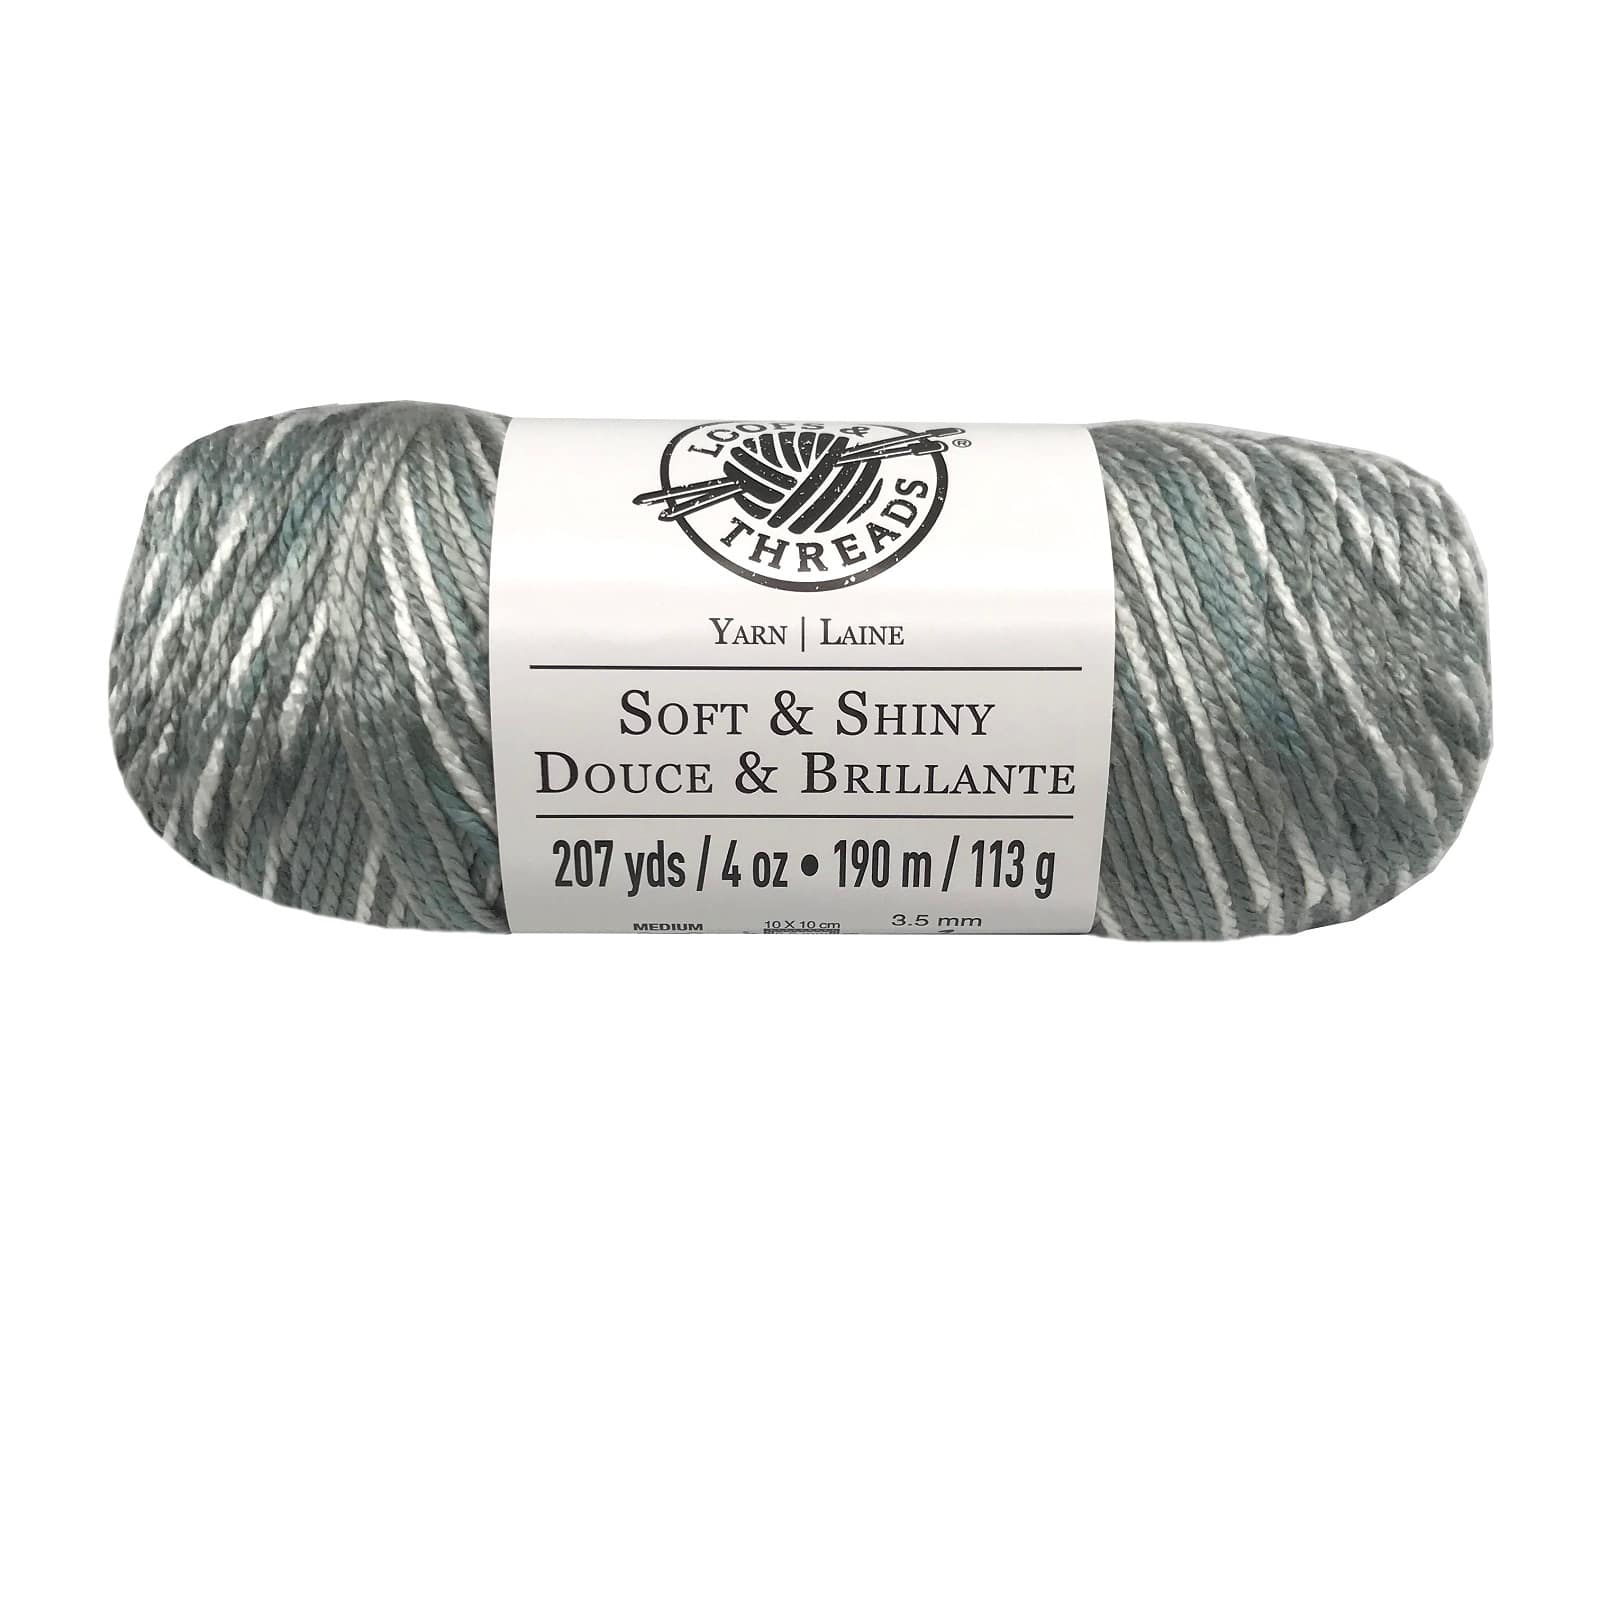 Loops & Threads Soft & Shiny Gray Yarn